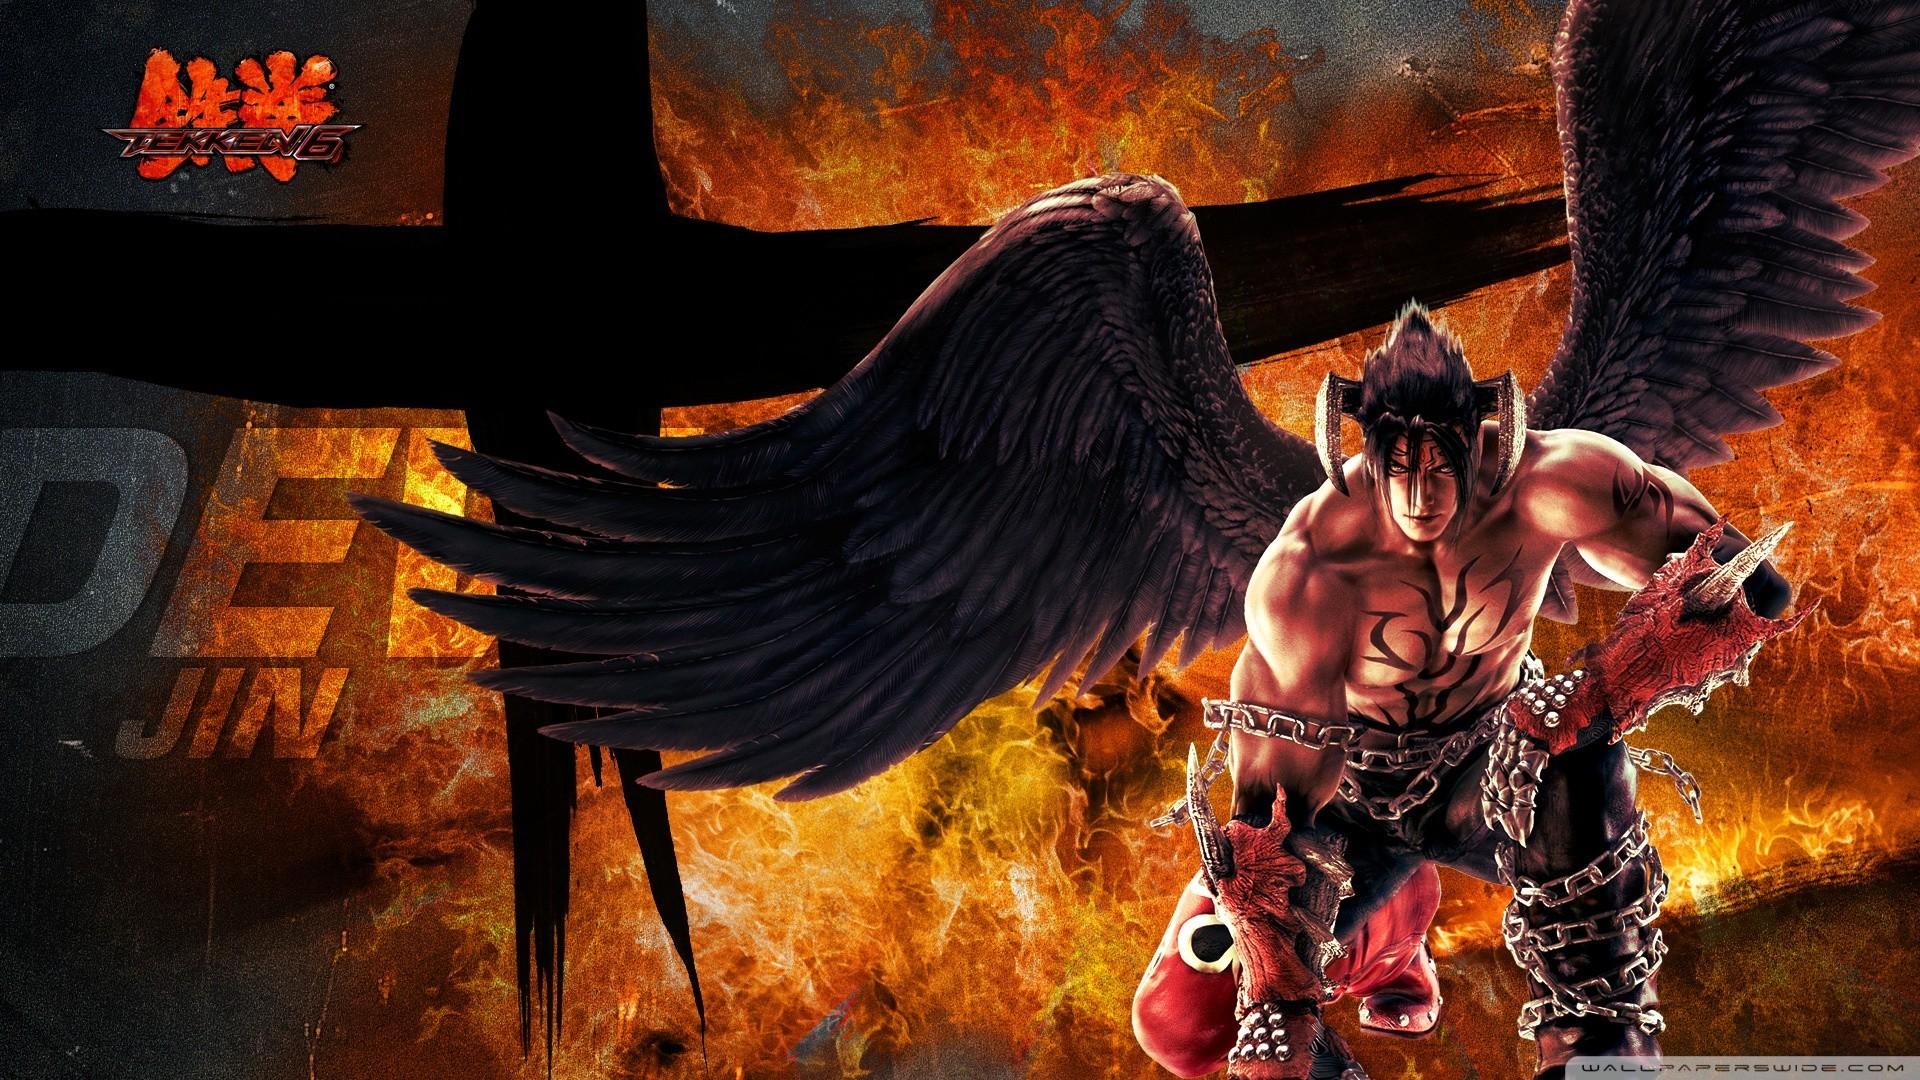 Jin Kazama Wallpaper Tekken 6 background picture